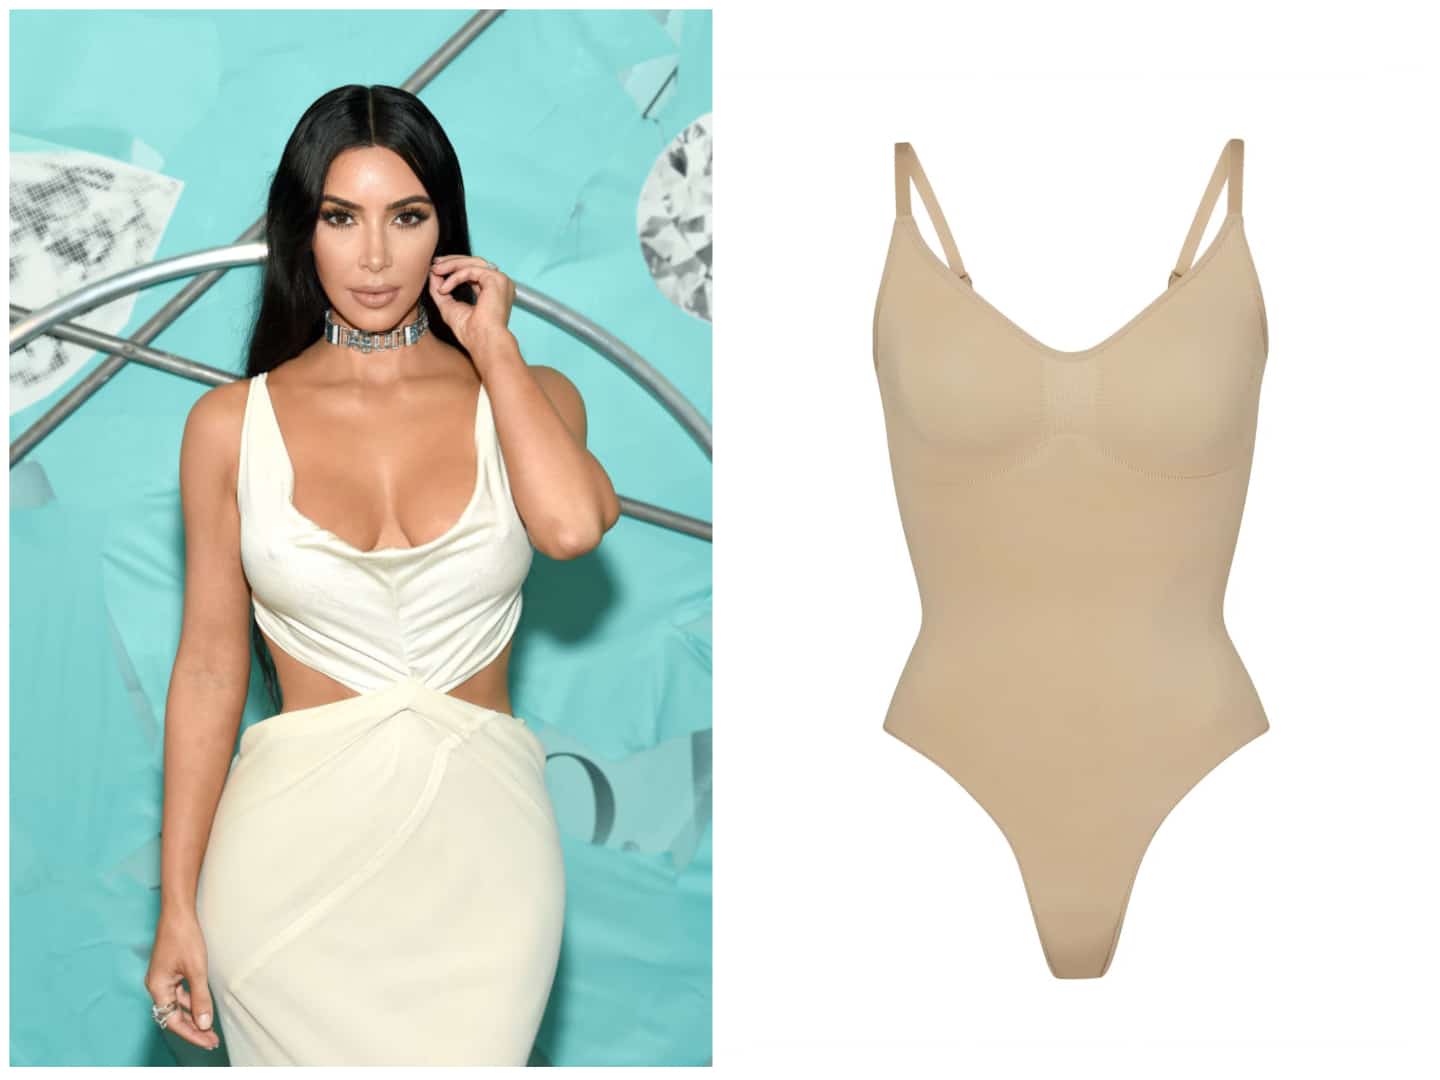 Kim Kardashian shows off her figure in sheer SKIMS bodysuits